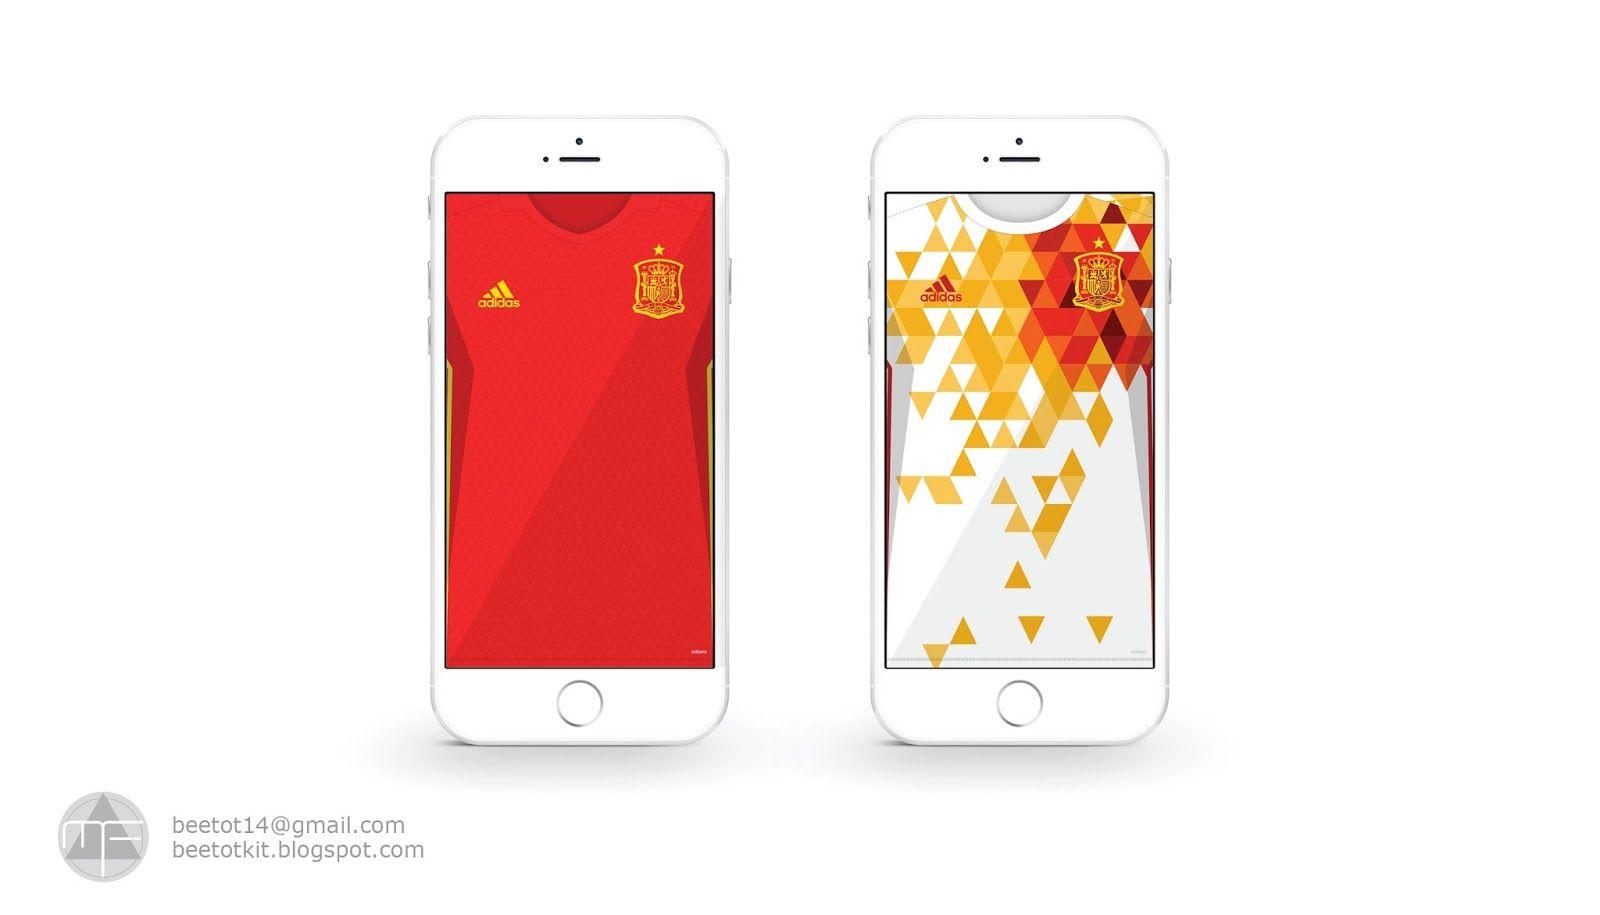 Beetot Kit: Spain Kit Euro 2016 Iphone 6 Wallpapers